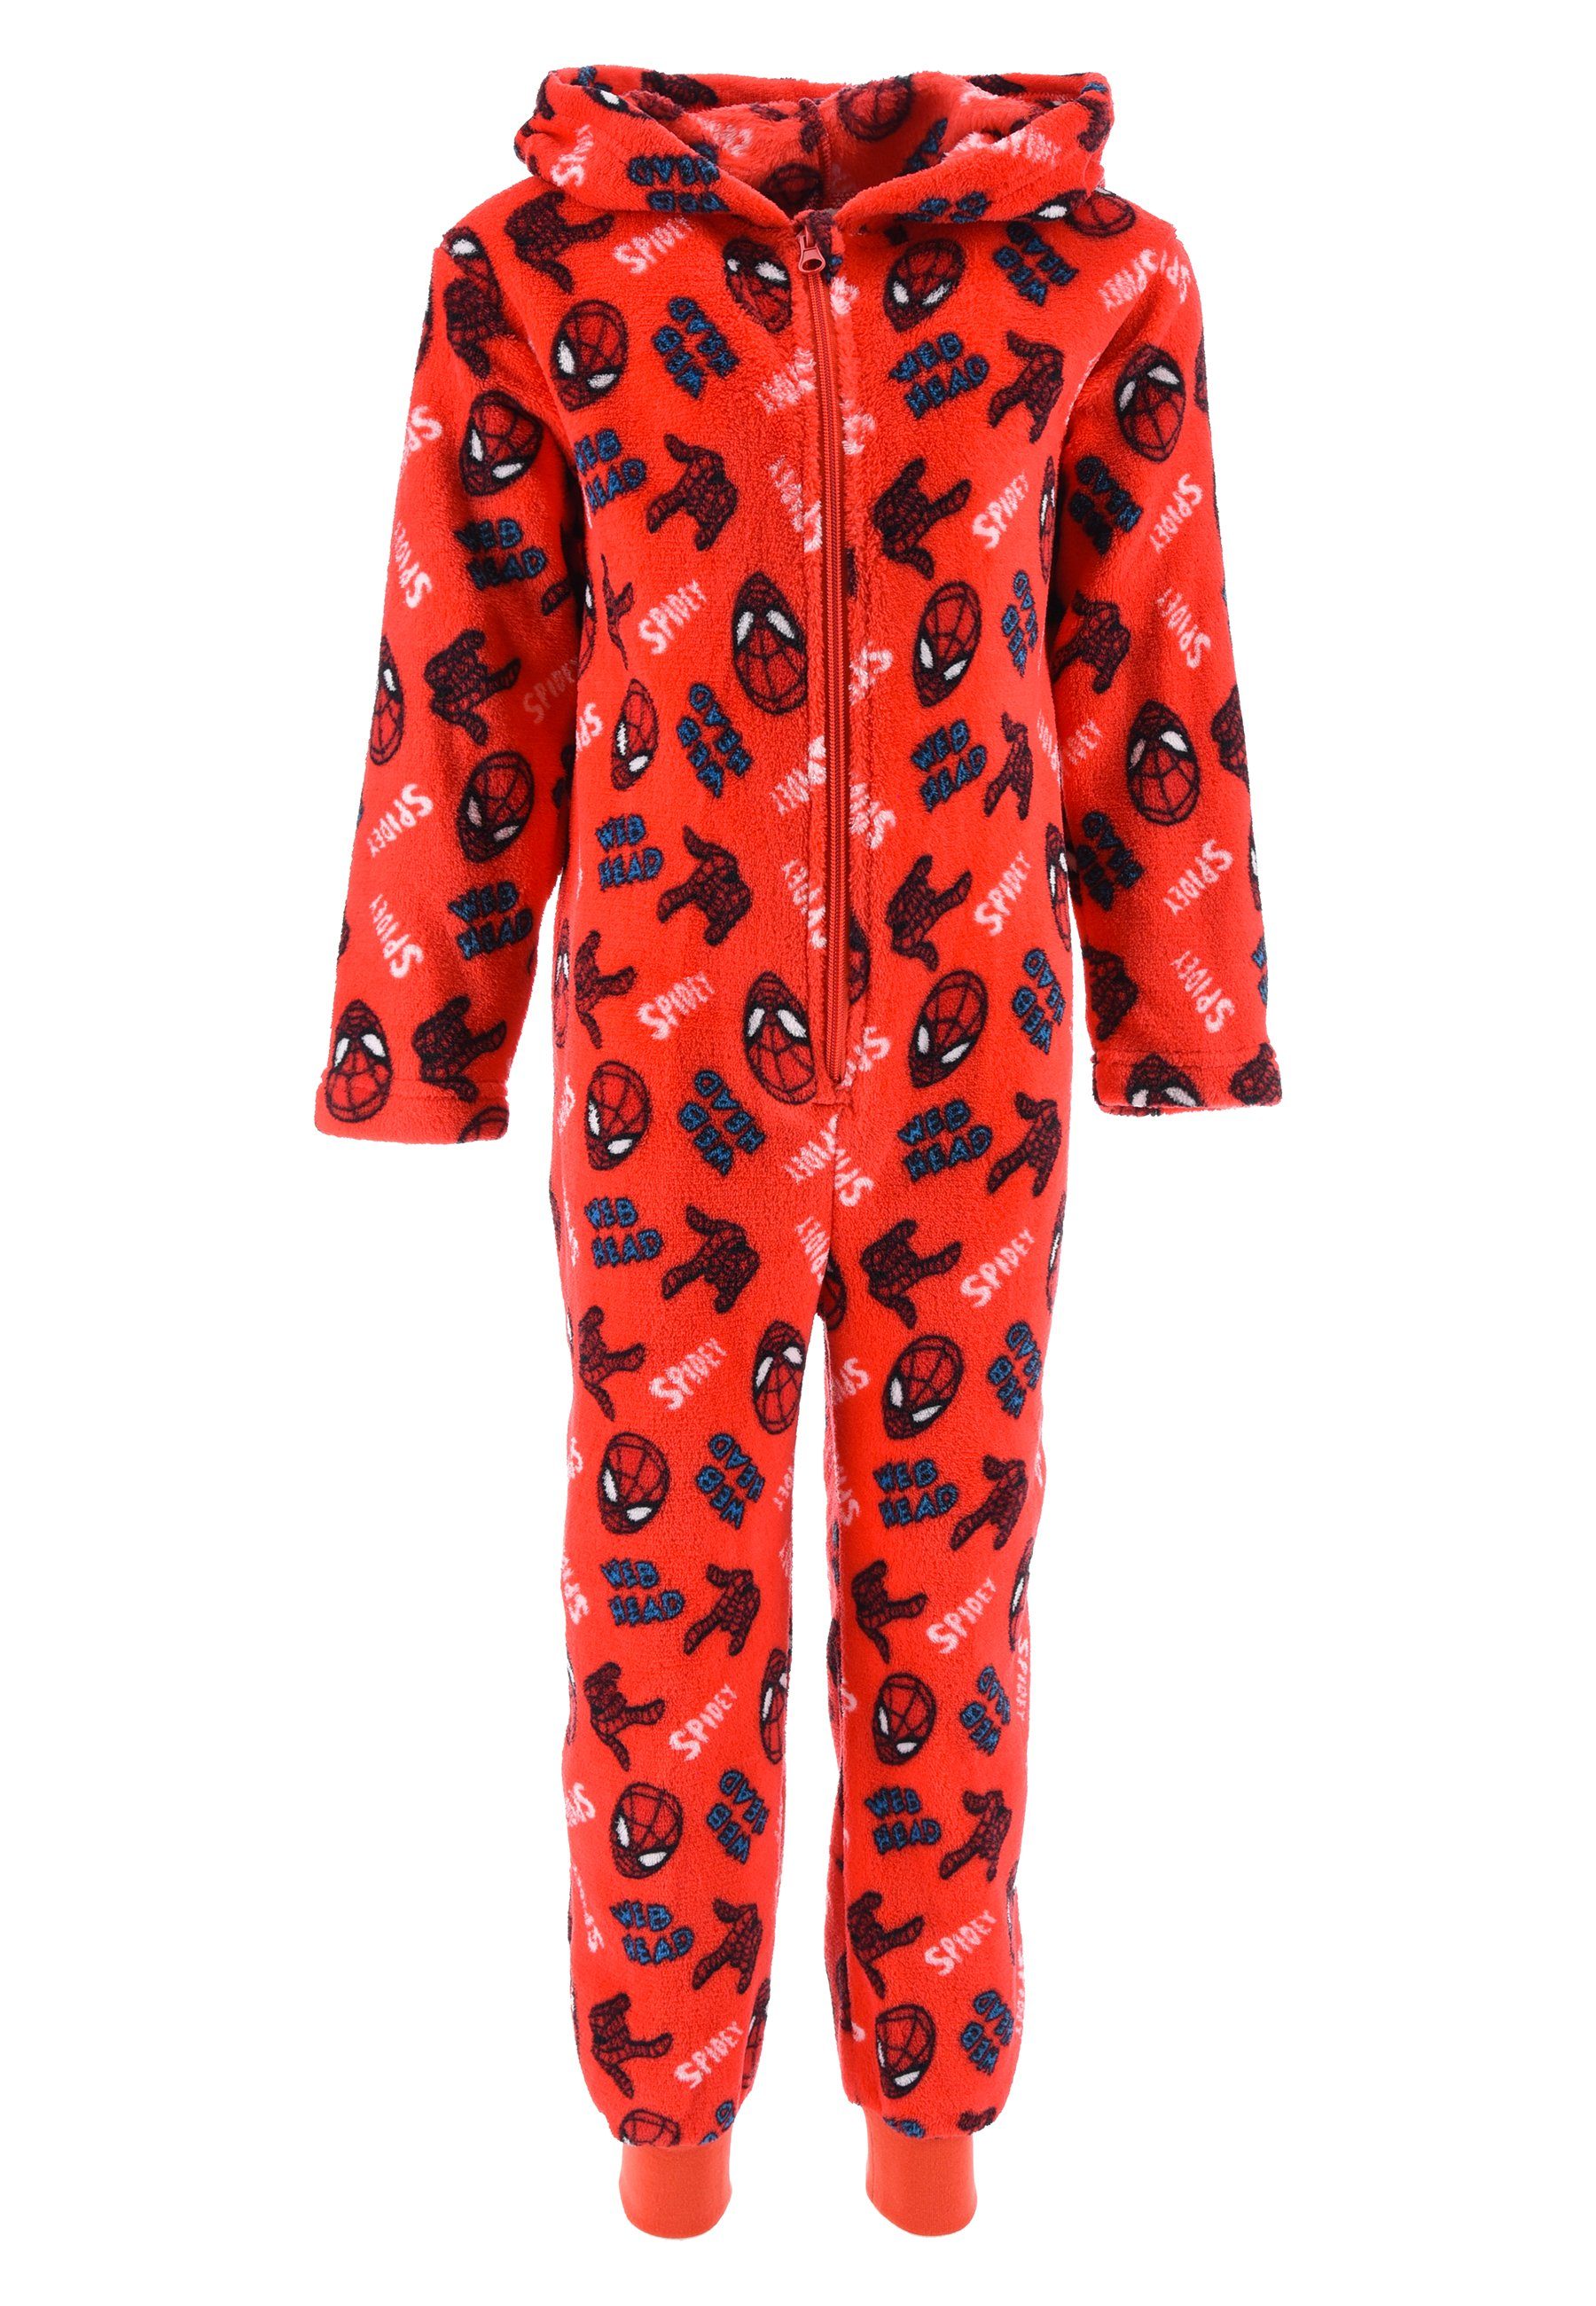 Rot langarm Pyjama Schlaf Schlafanzug Spiderman Overall Schlafanzug